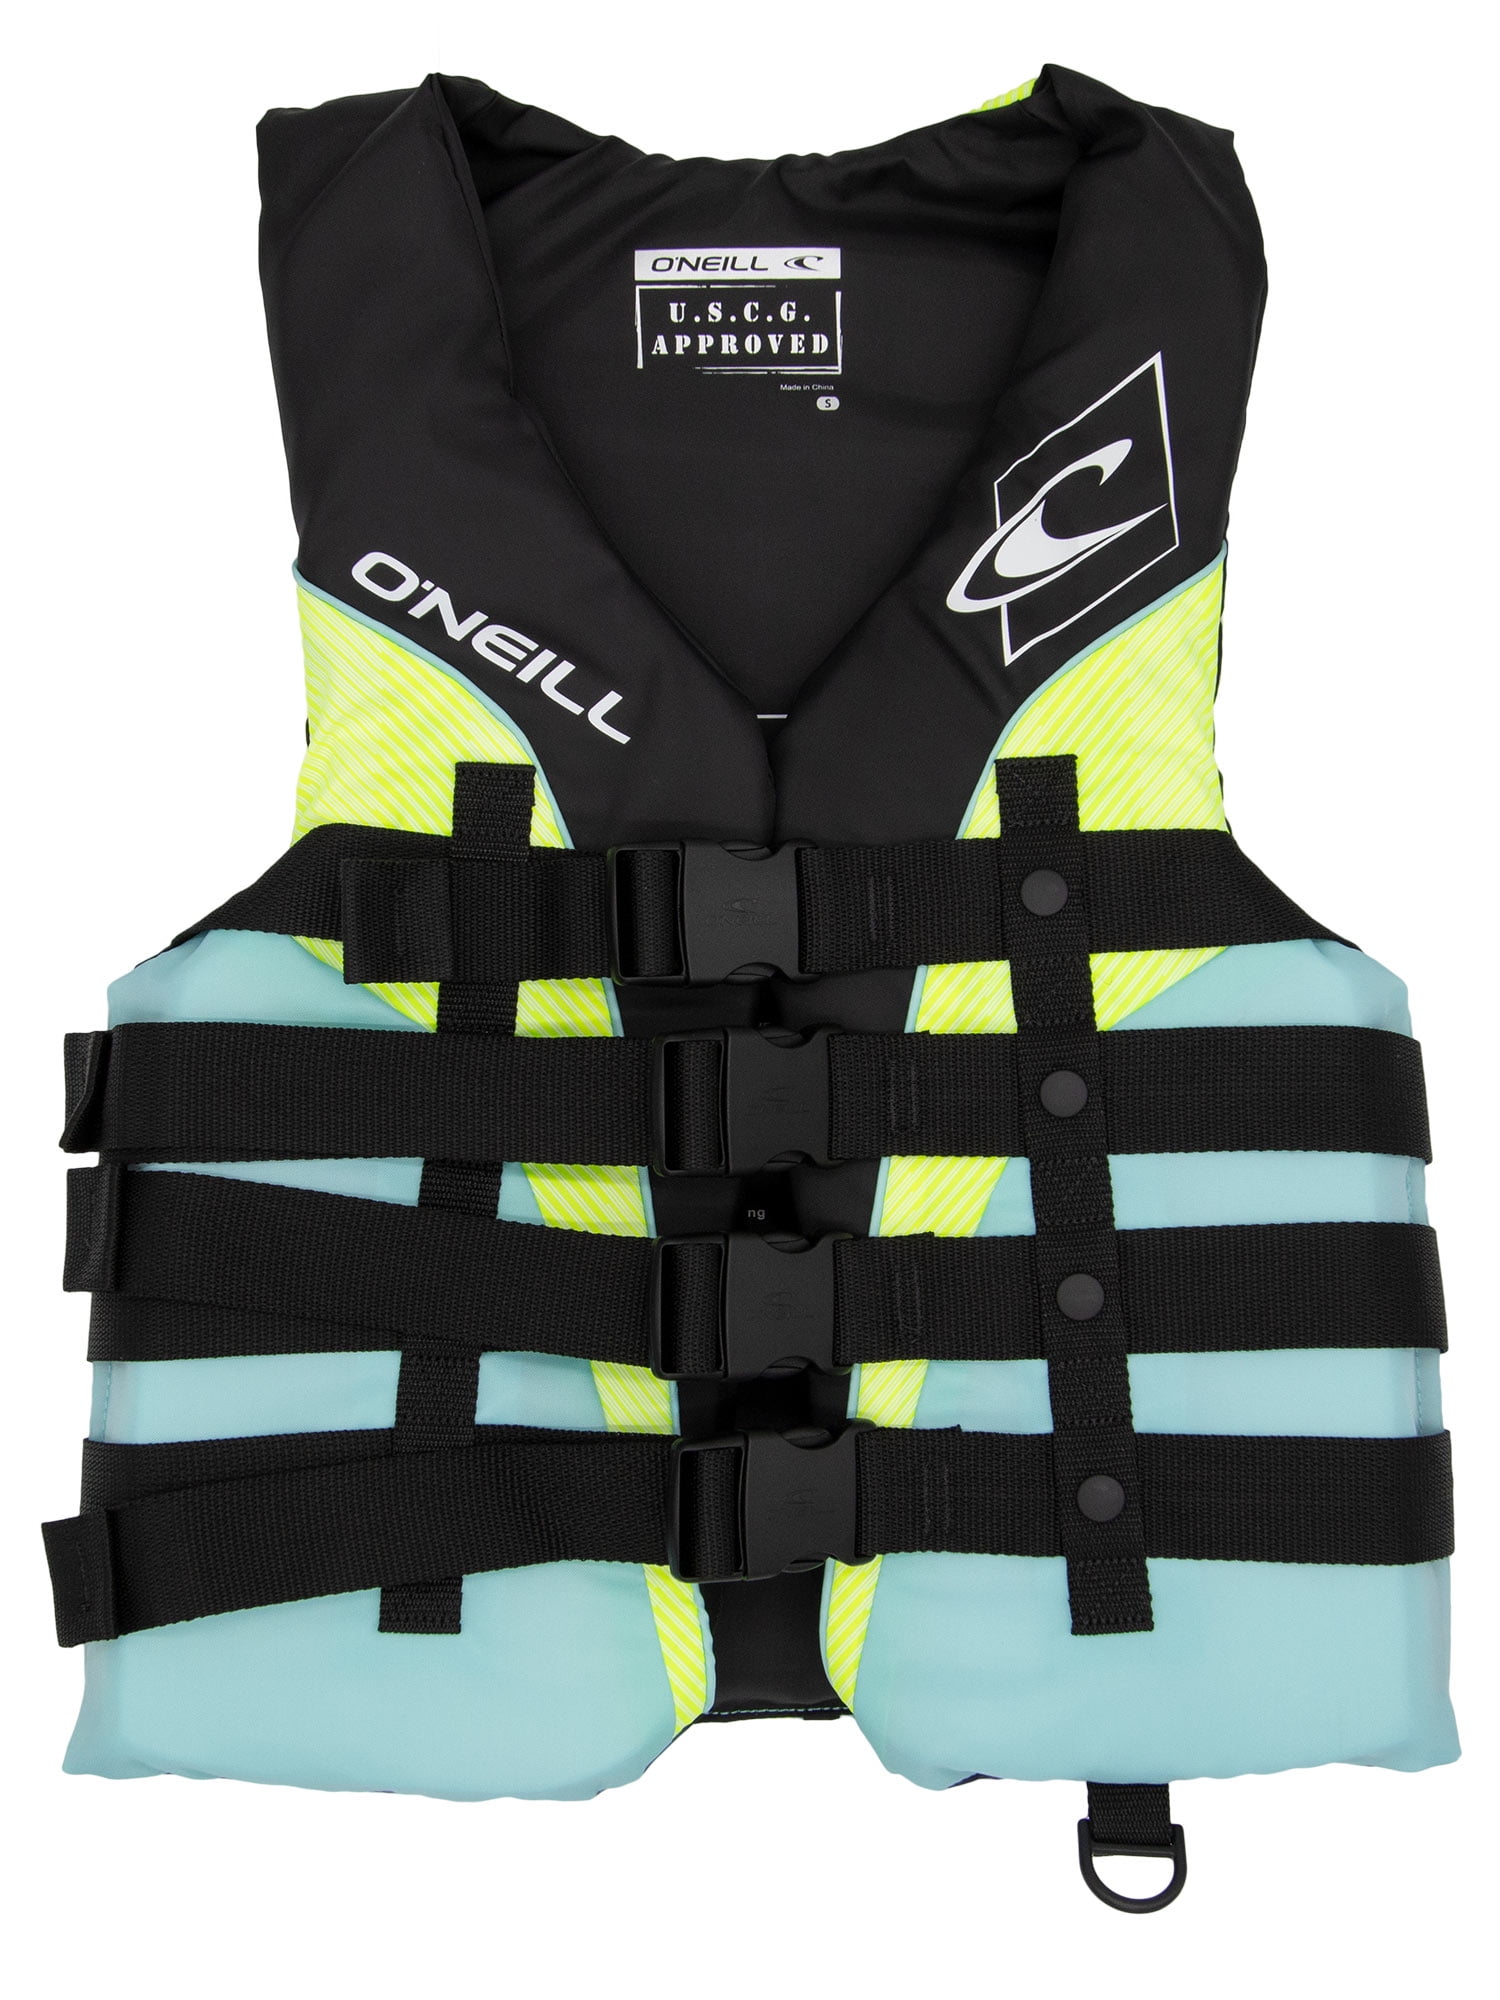 O'Neill mens Superlite USCG life vest M Black/turquoise/lime (4723)